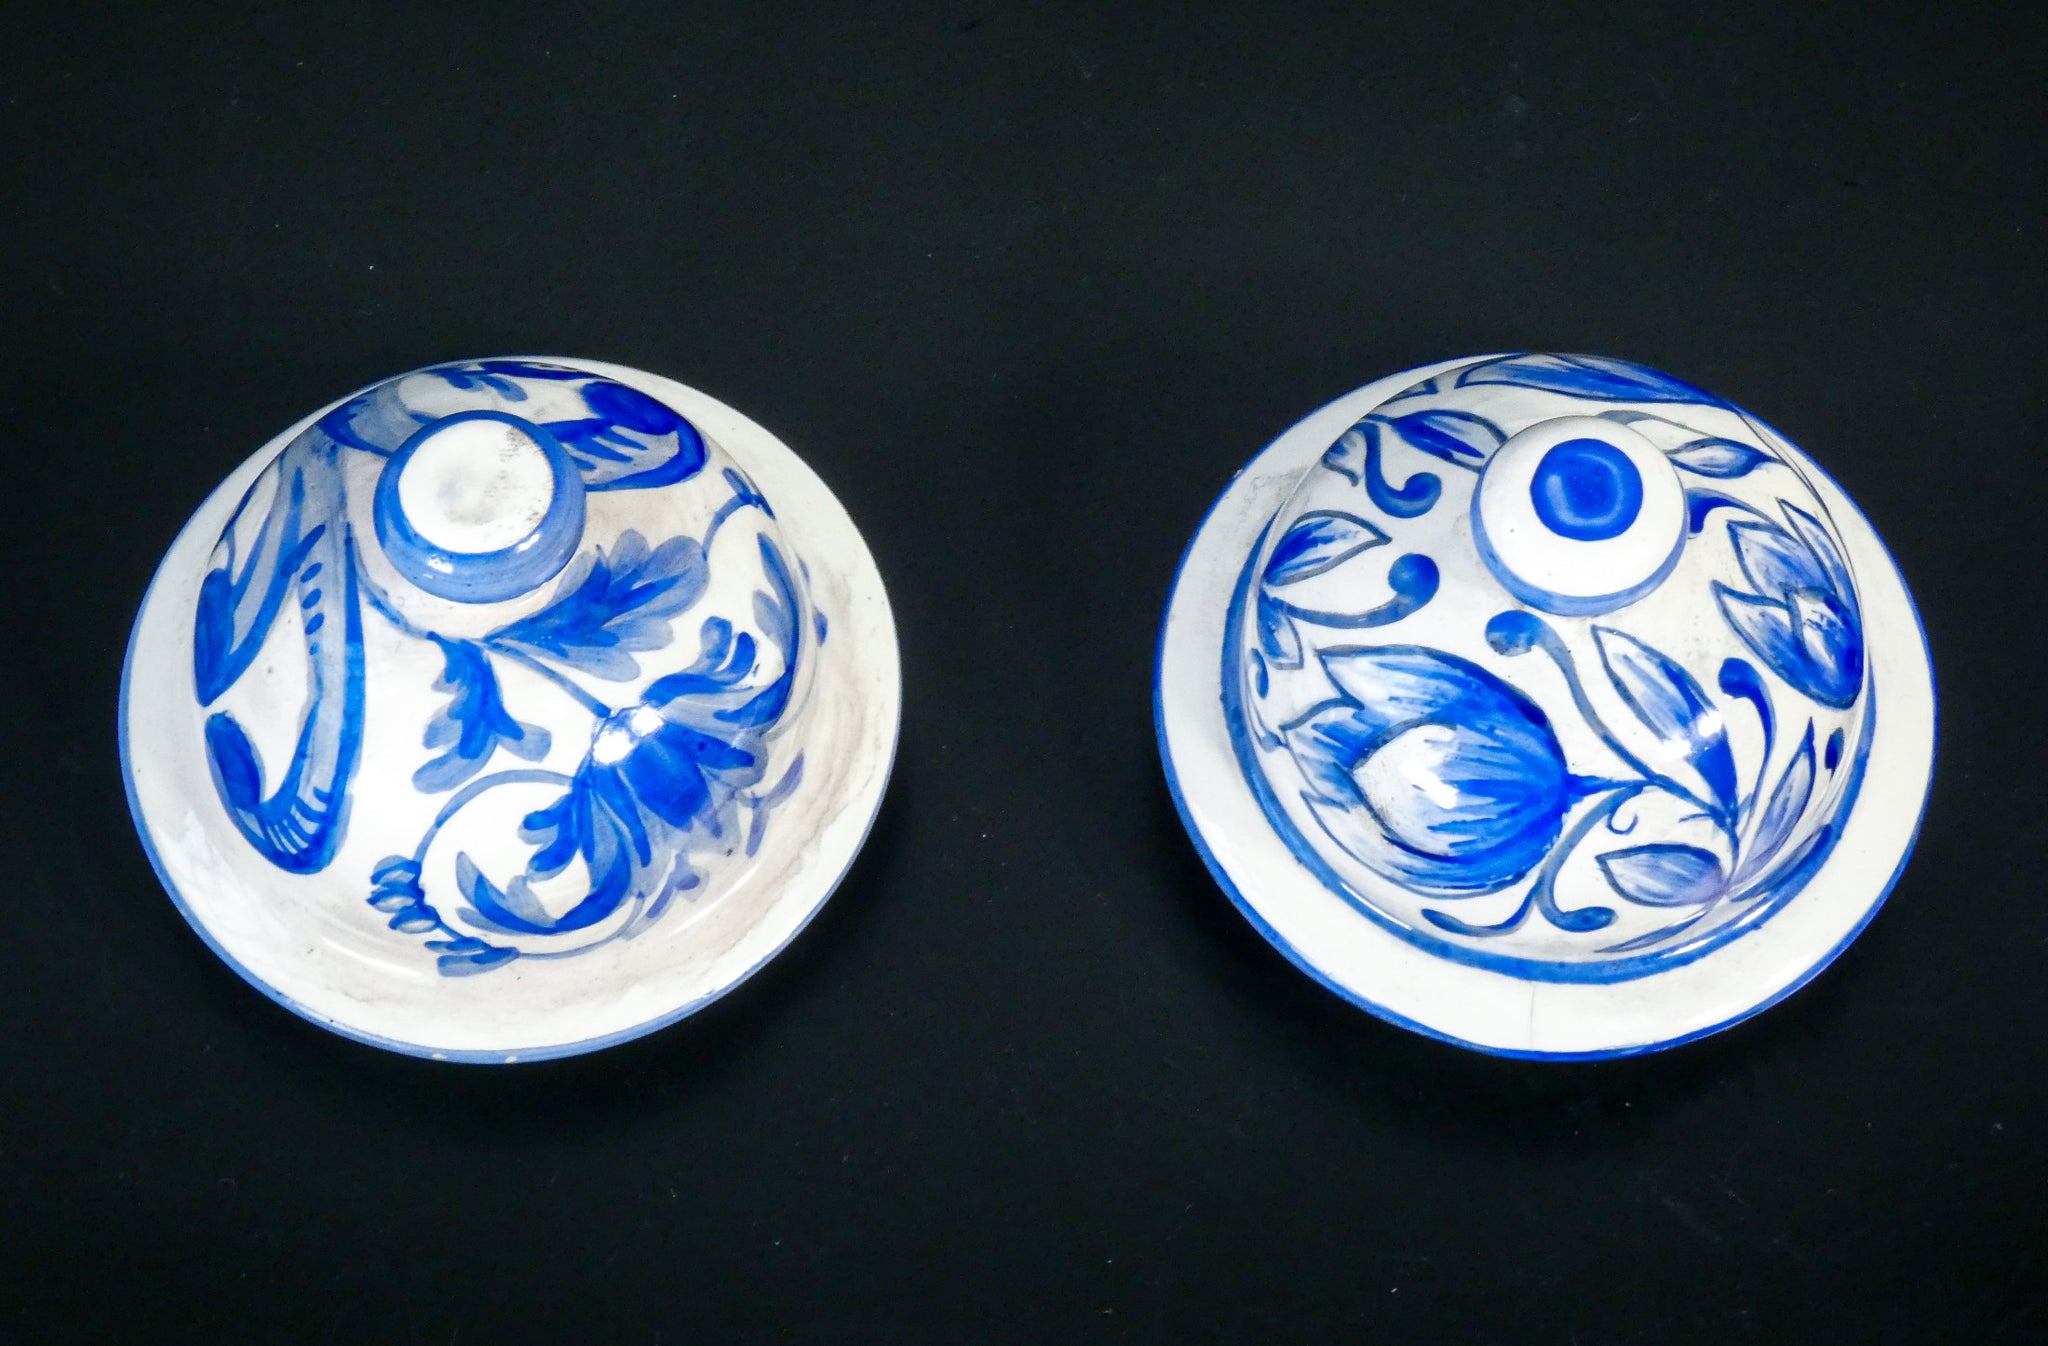 coppia vasi farmacia albarello ceramica rosanna dipinta blu bianco porcellana